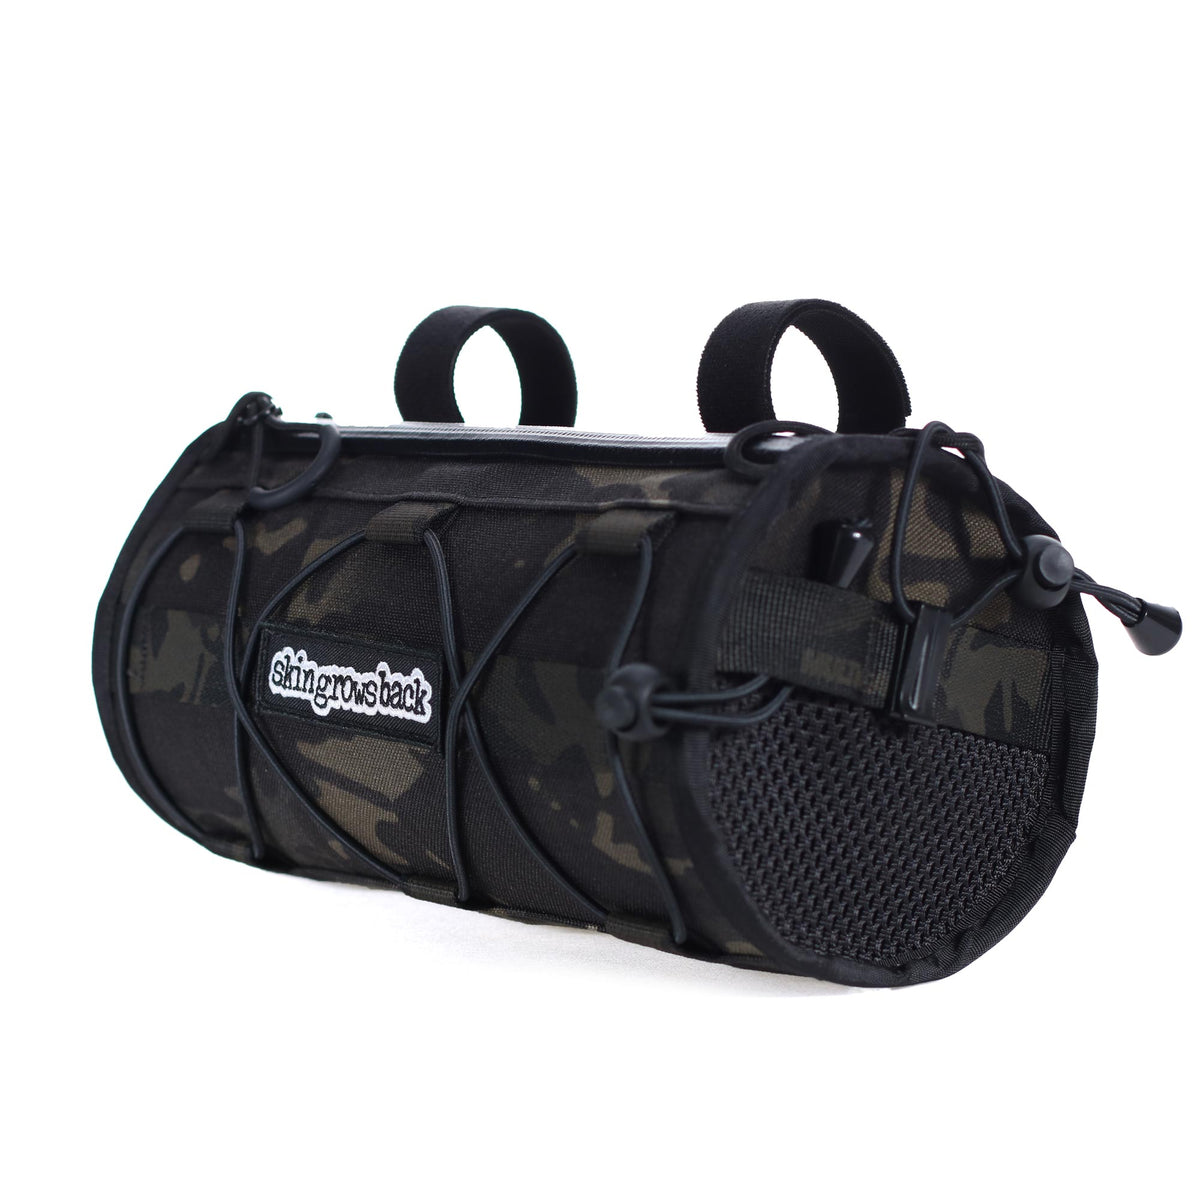 skingrowsback MultiCam Black cycling handlebar bag